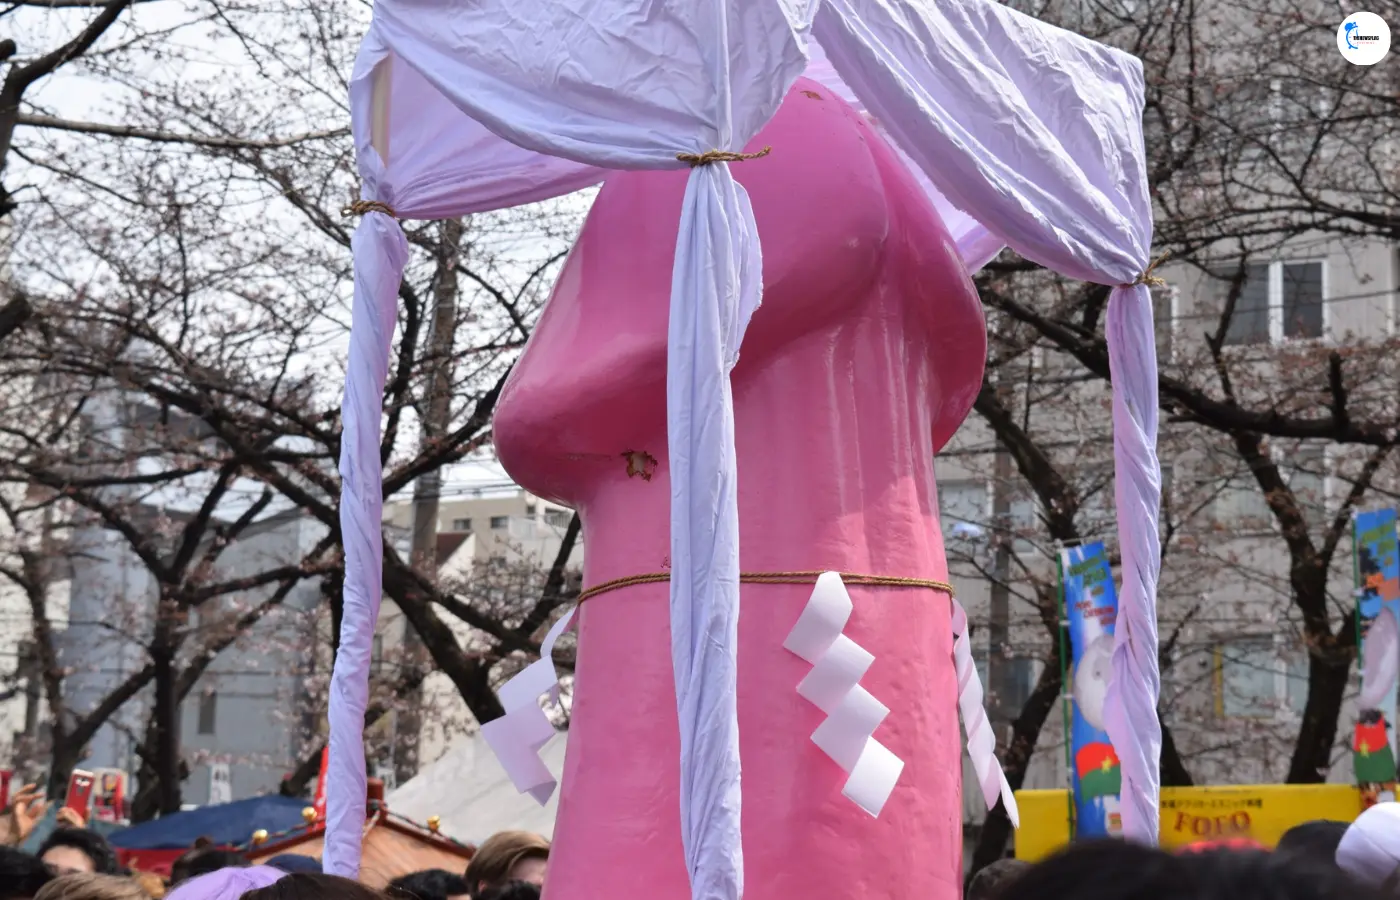 Why is Kanamara Matsuri(Penis Festival) celebrated?